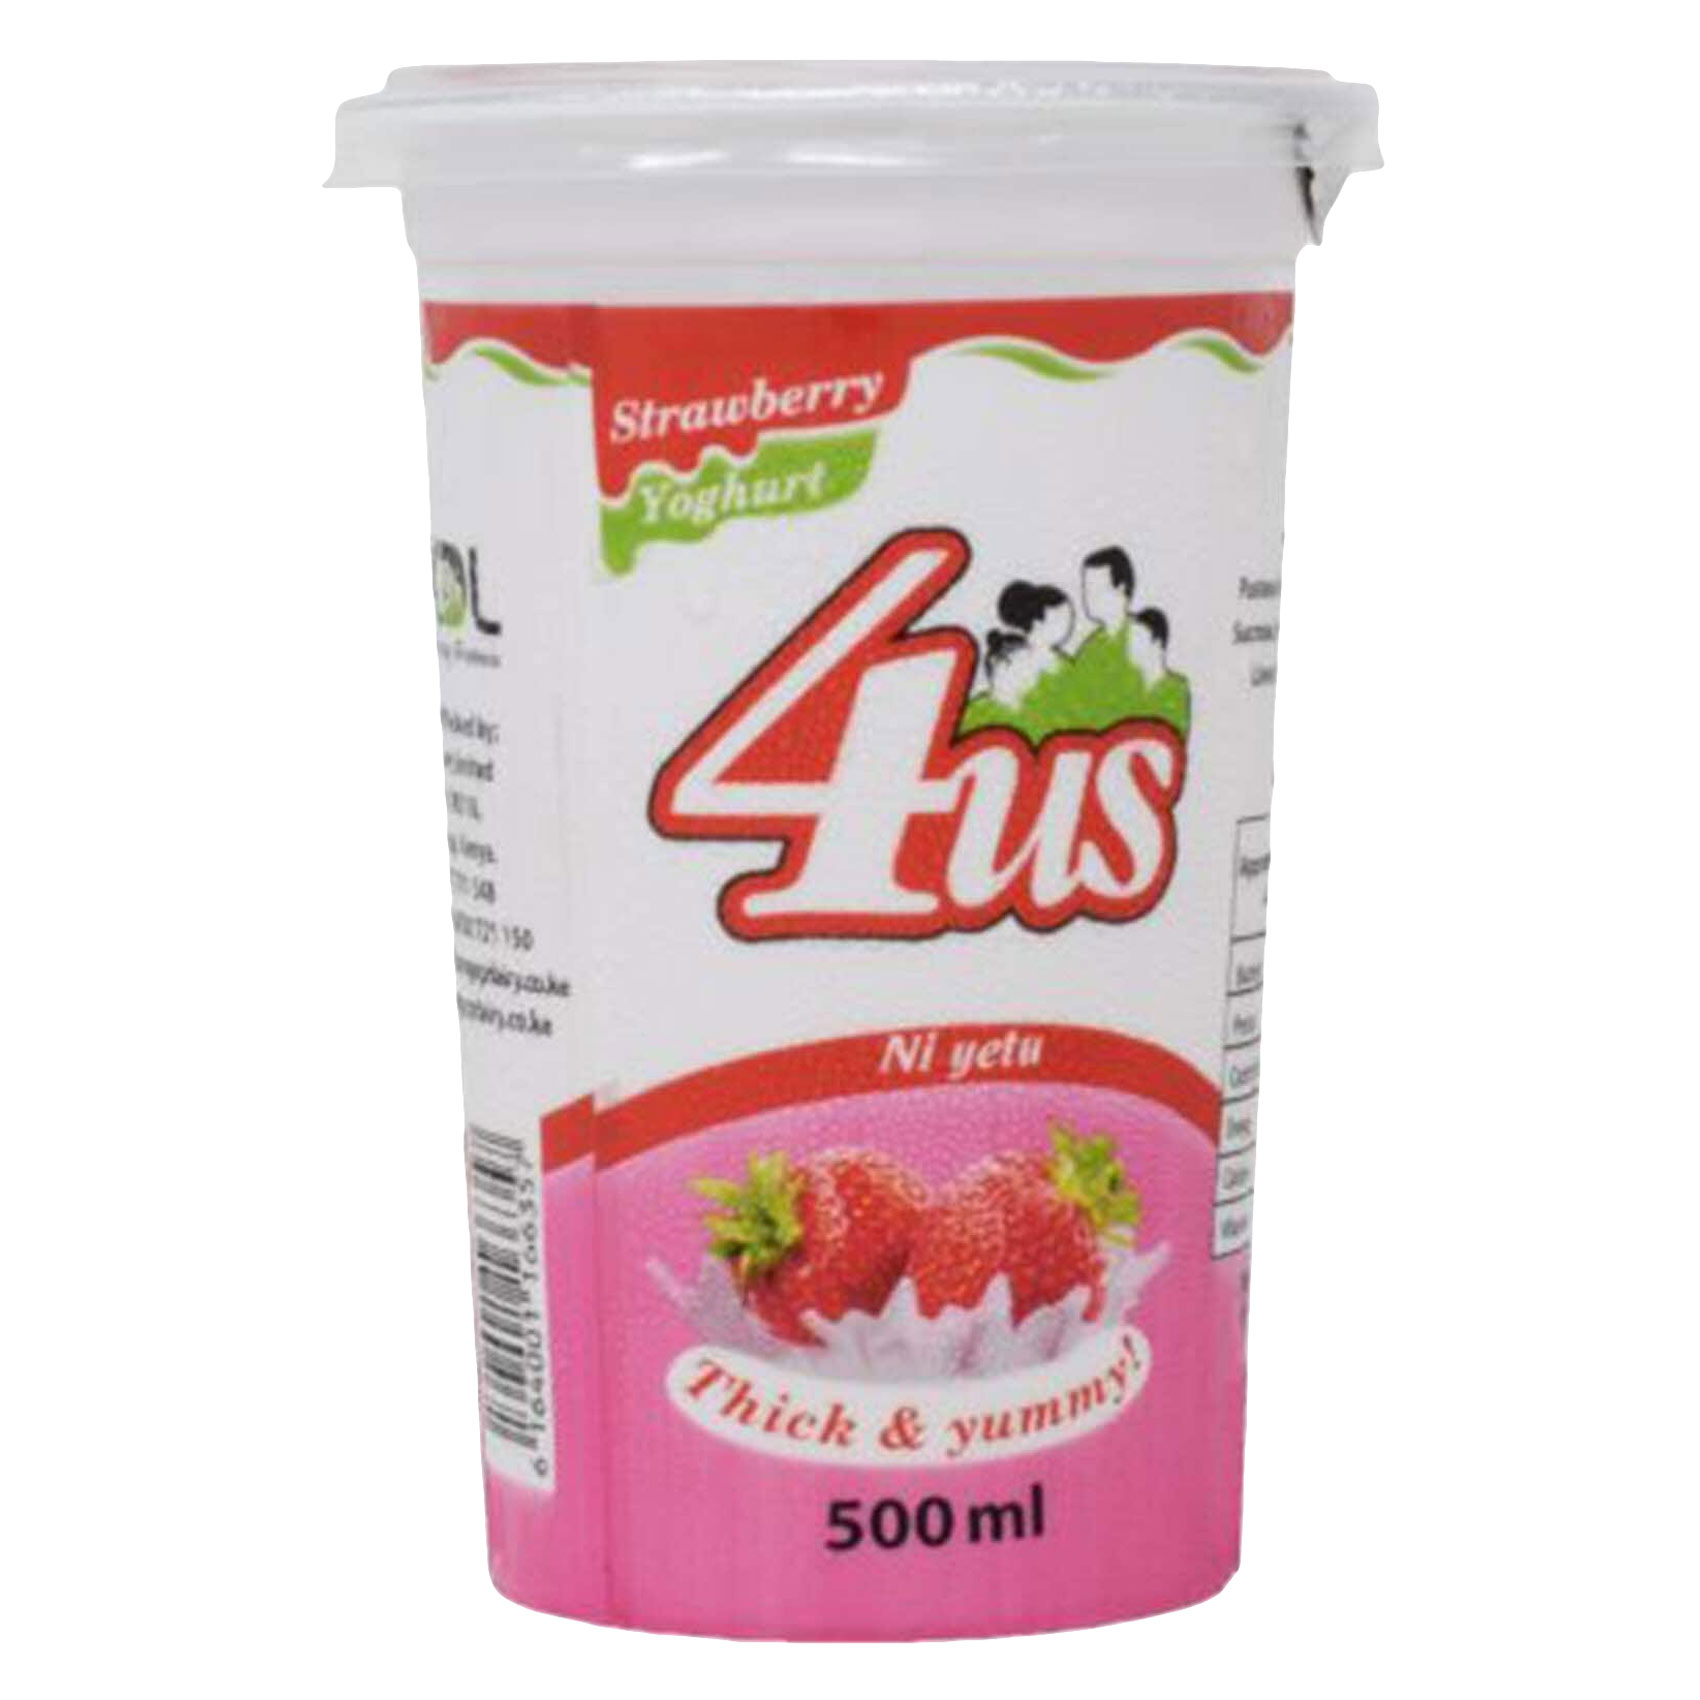 4Us Thick And Yummy Strawberry Yoghurt 500ml